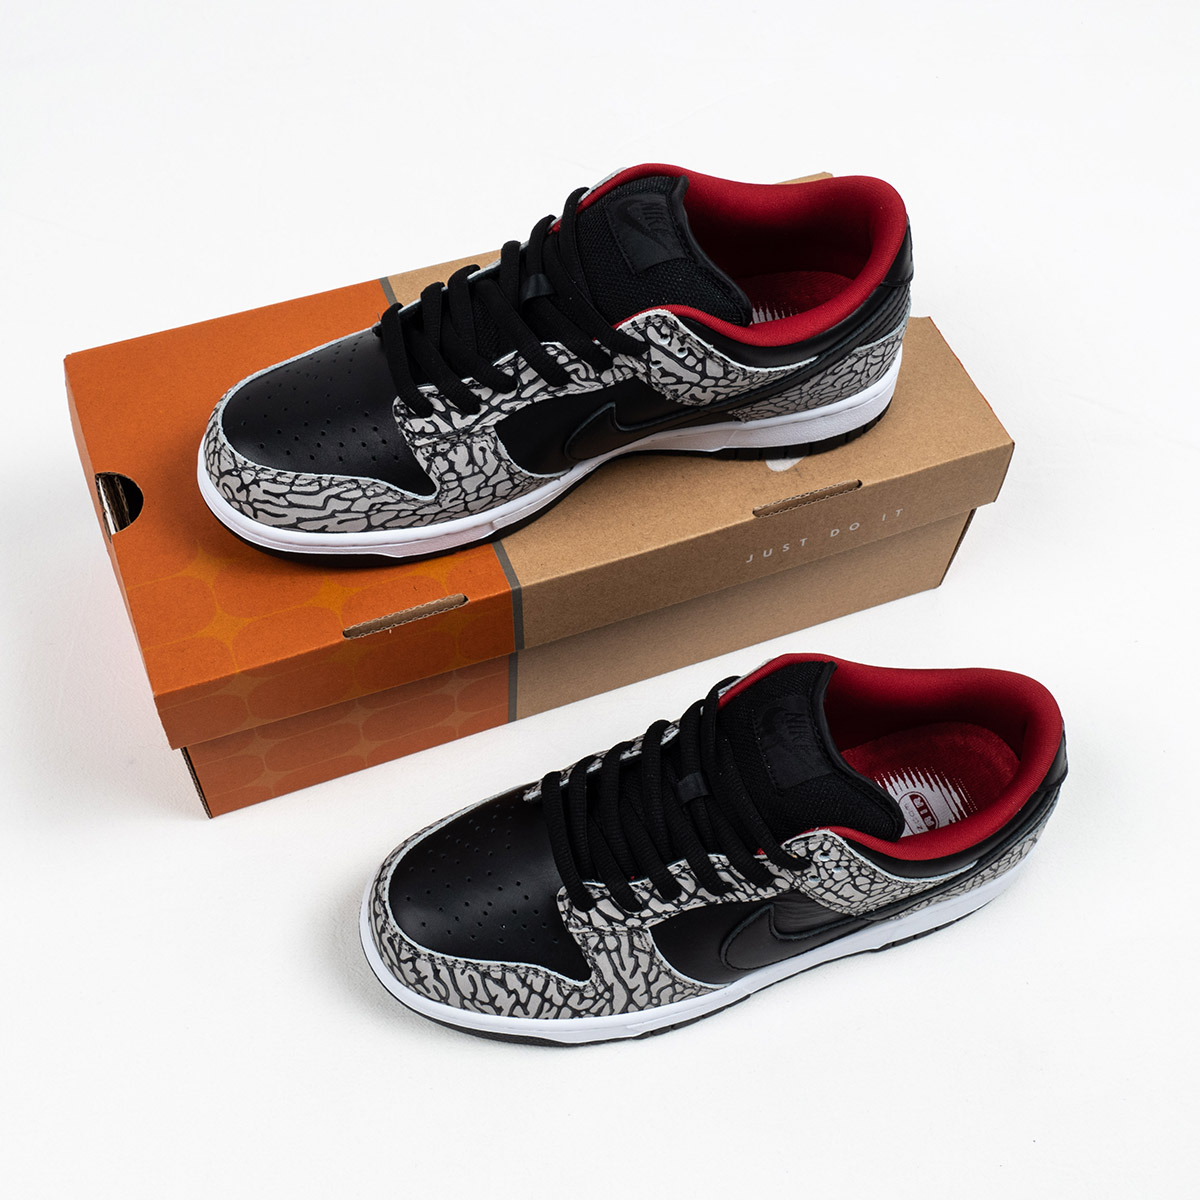 Supreme x Nike SB Dunk Low “Black Cement” For Sale – Sneaker Hello